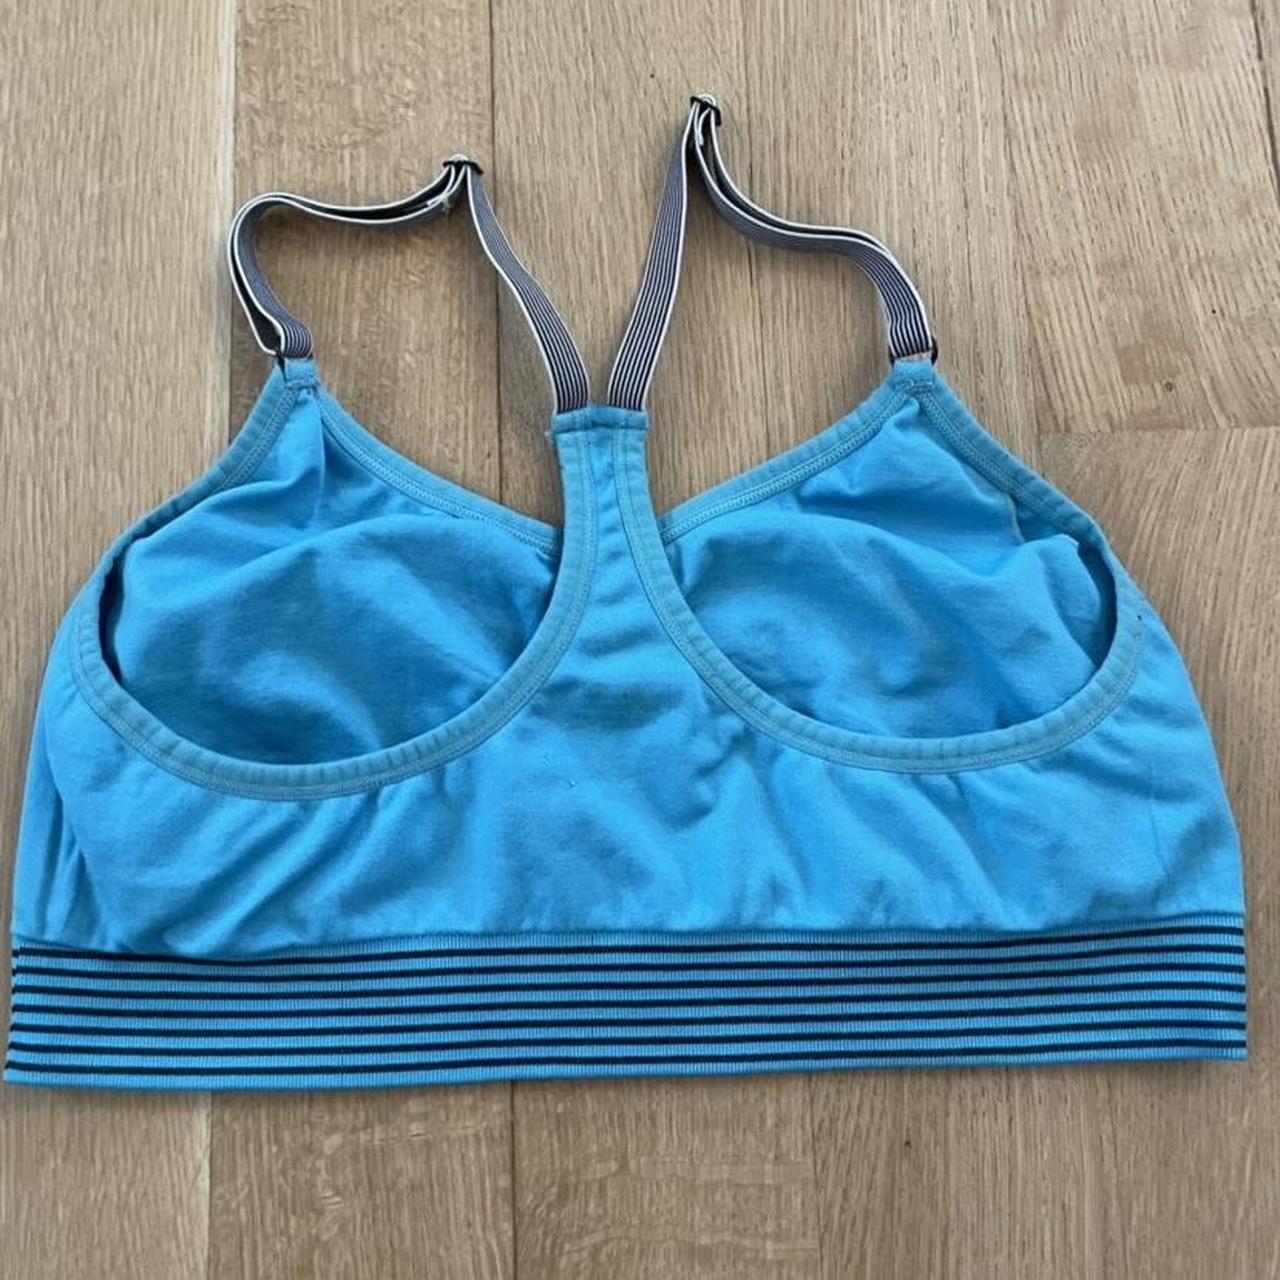 Cute bright blue sports bra from new balance. Has... - Depop